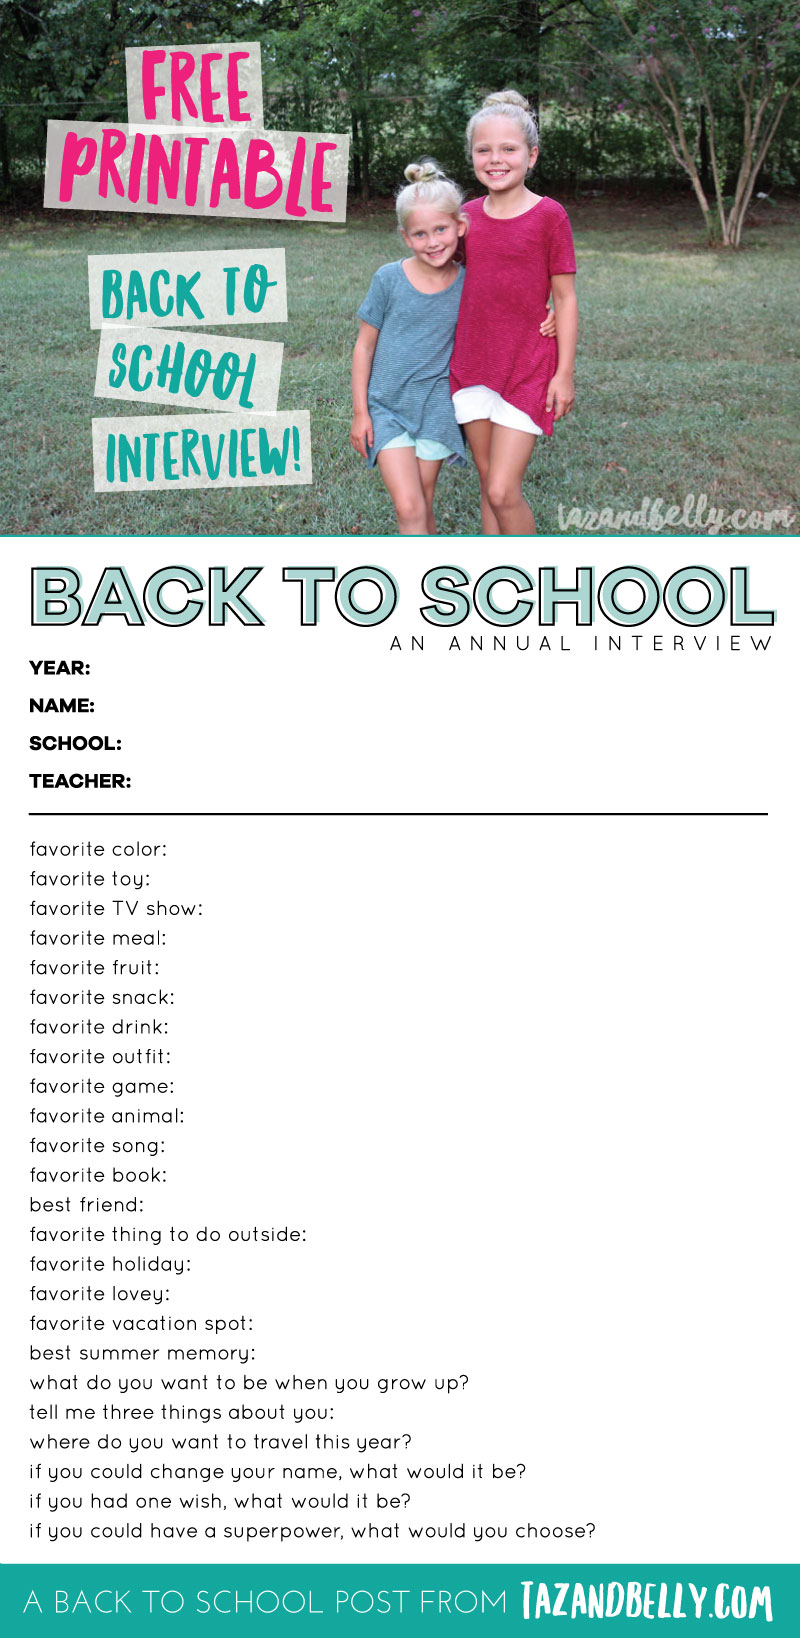 Free Printable Back to School Interview | tazandbelly.com